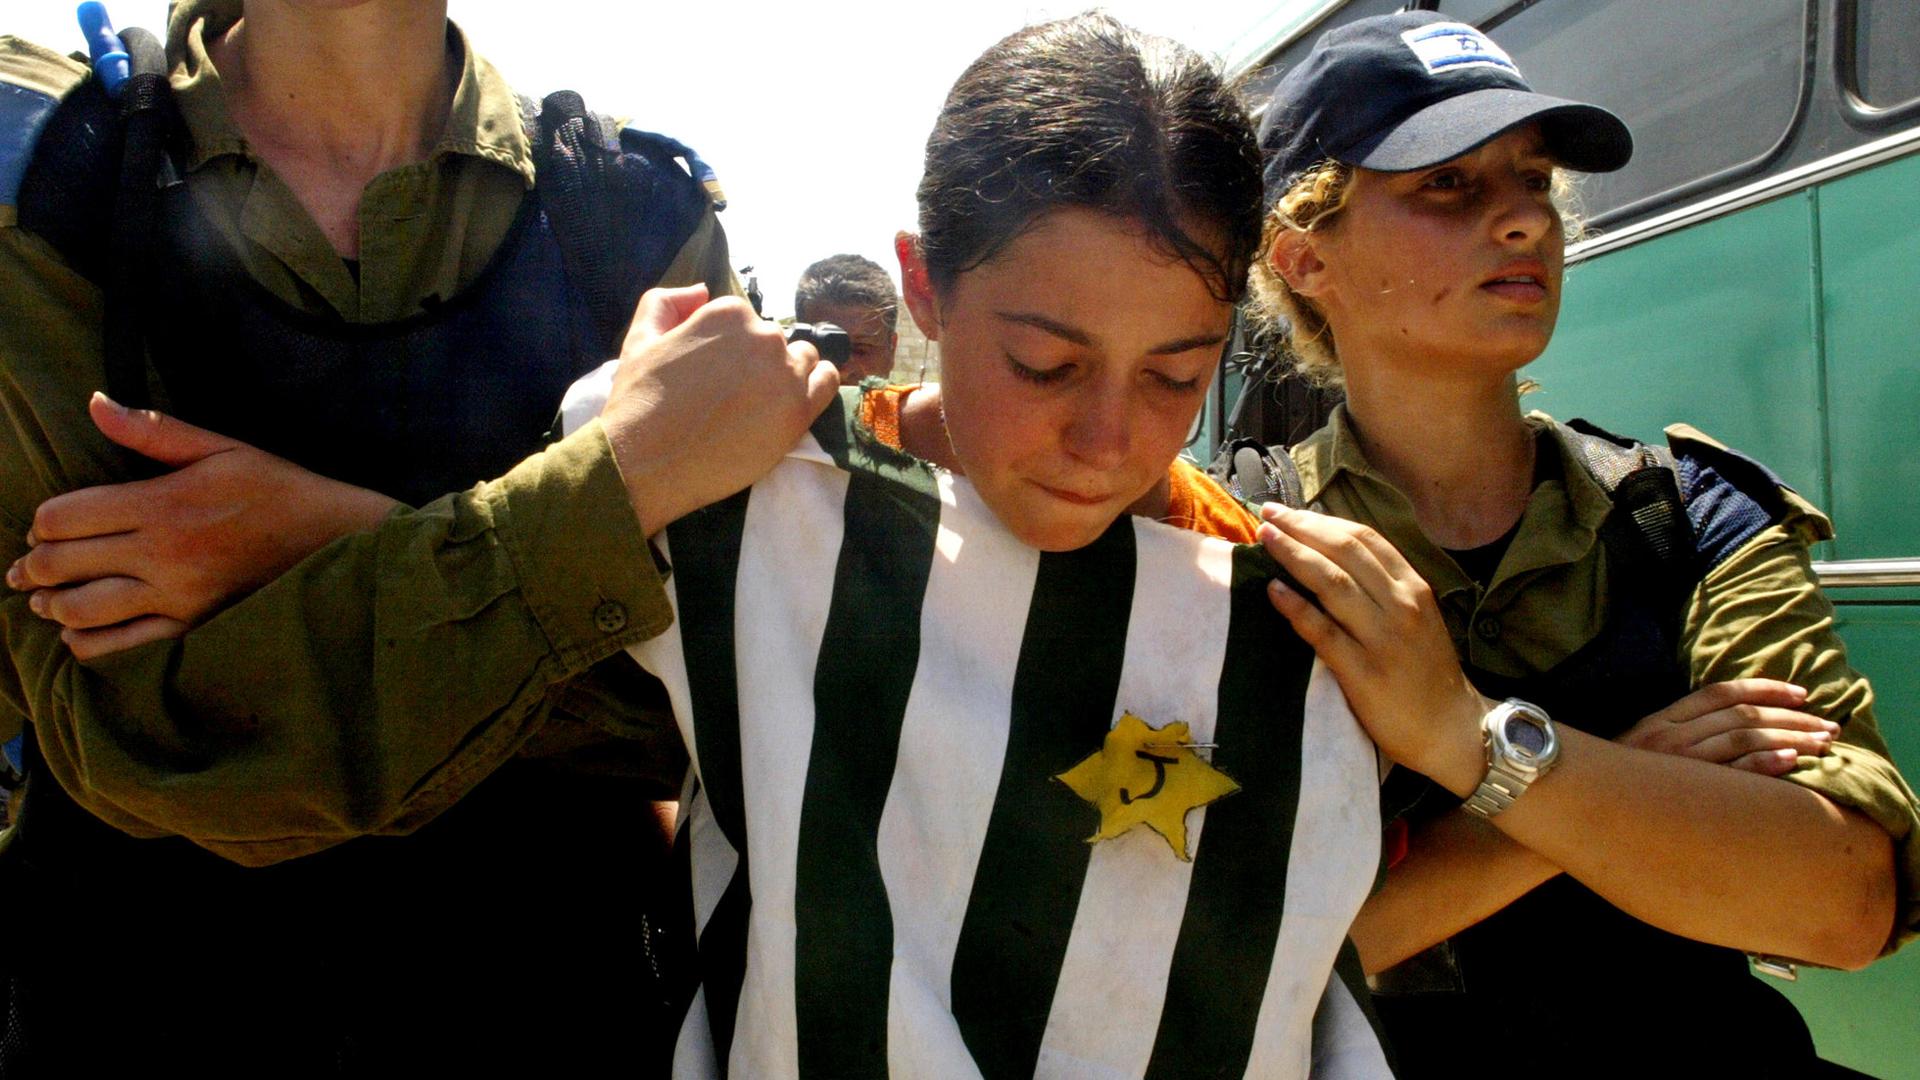 Israeli protester